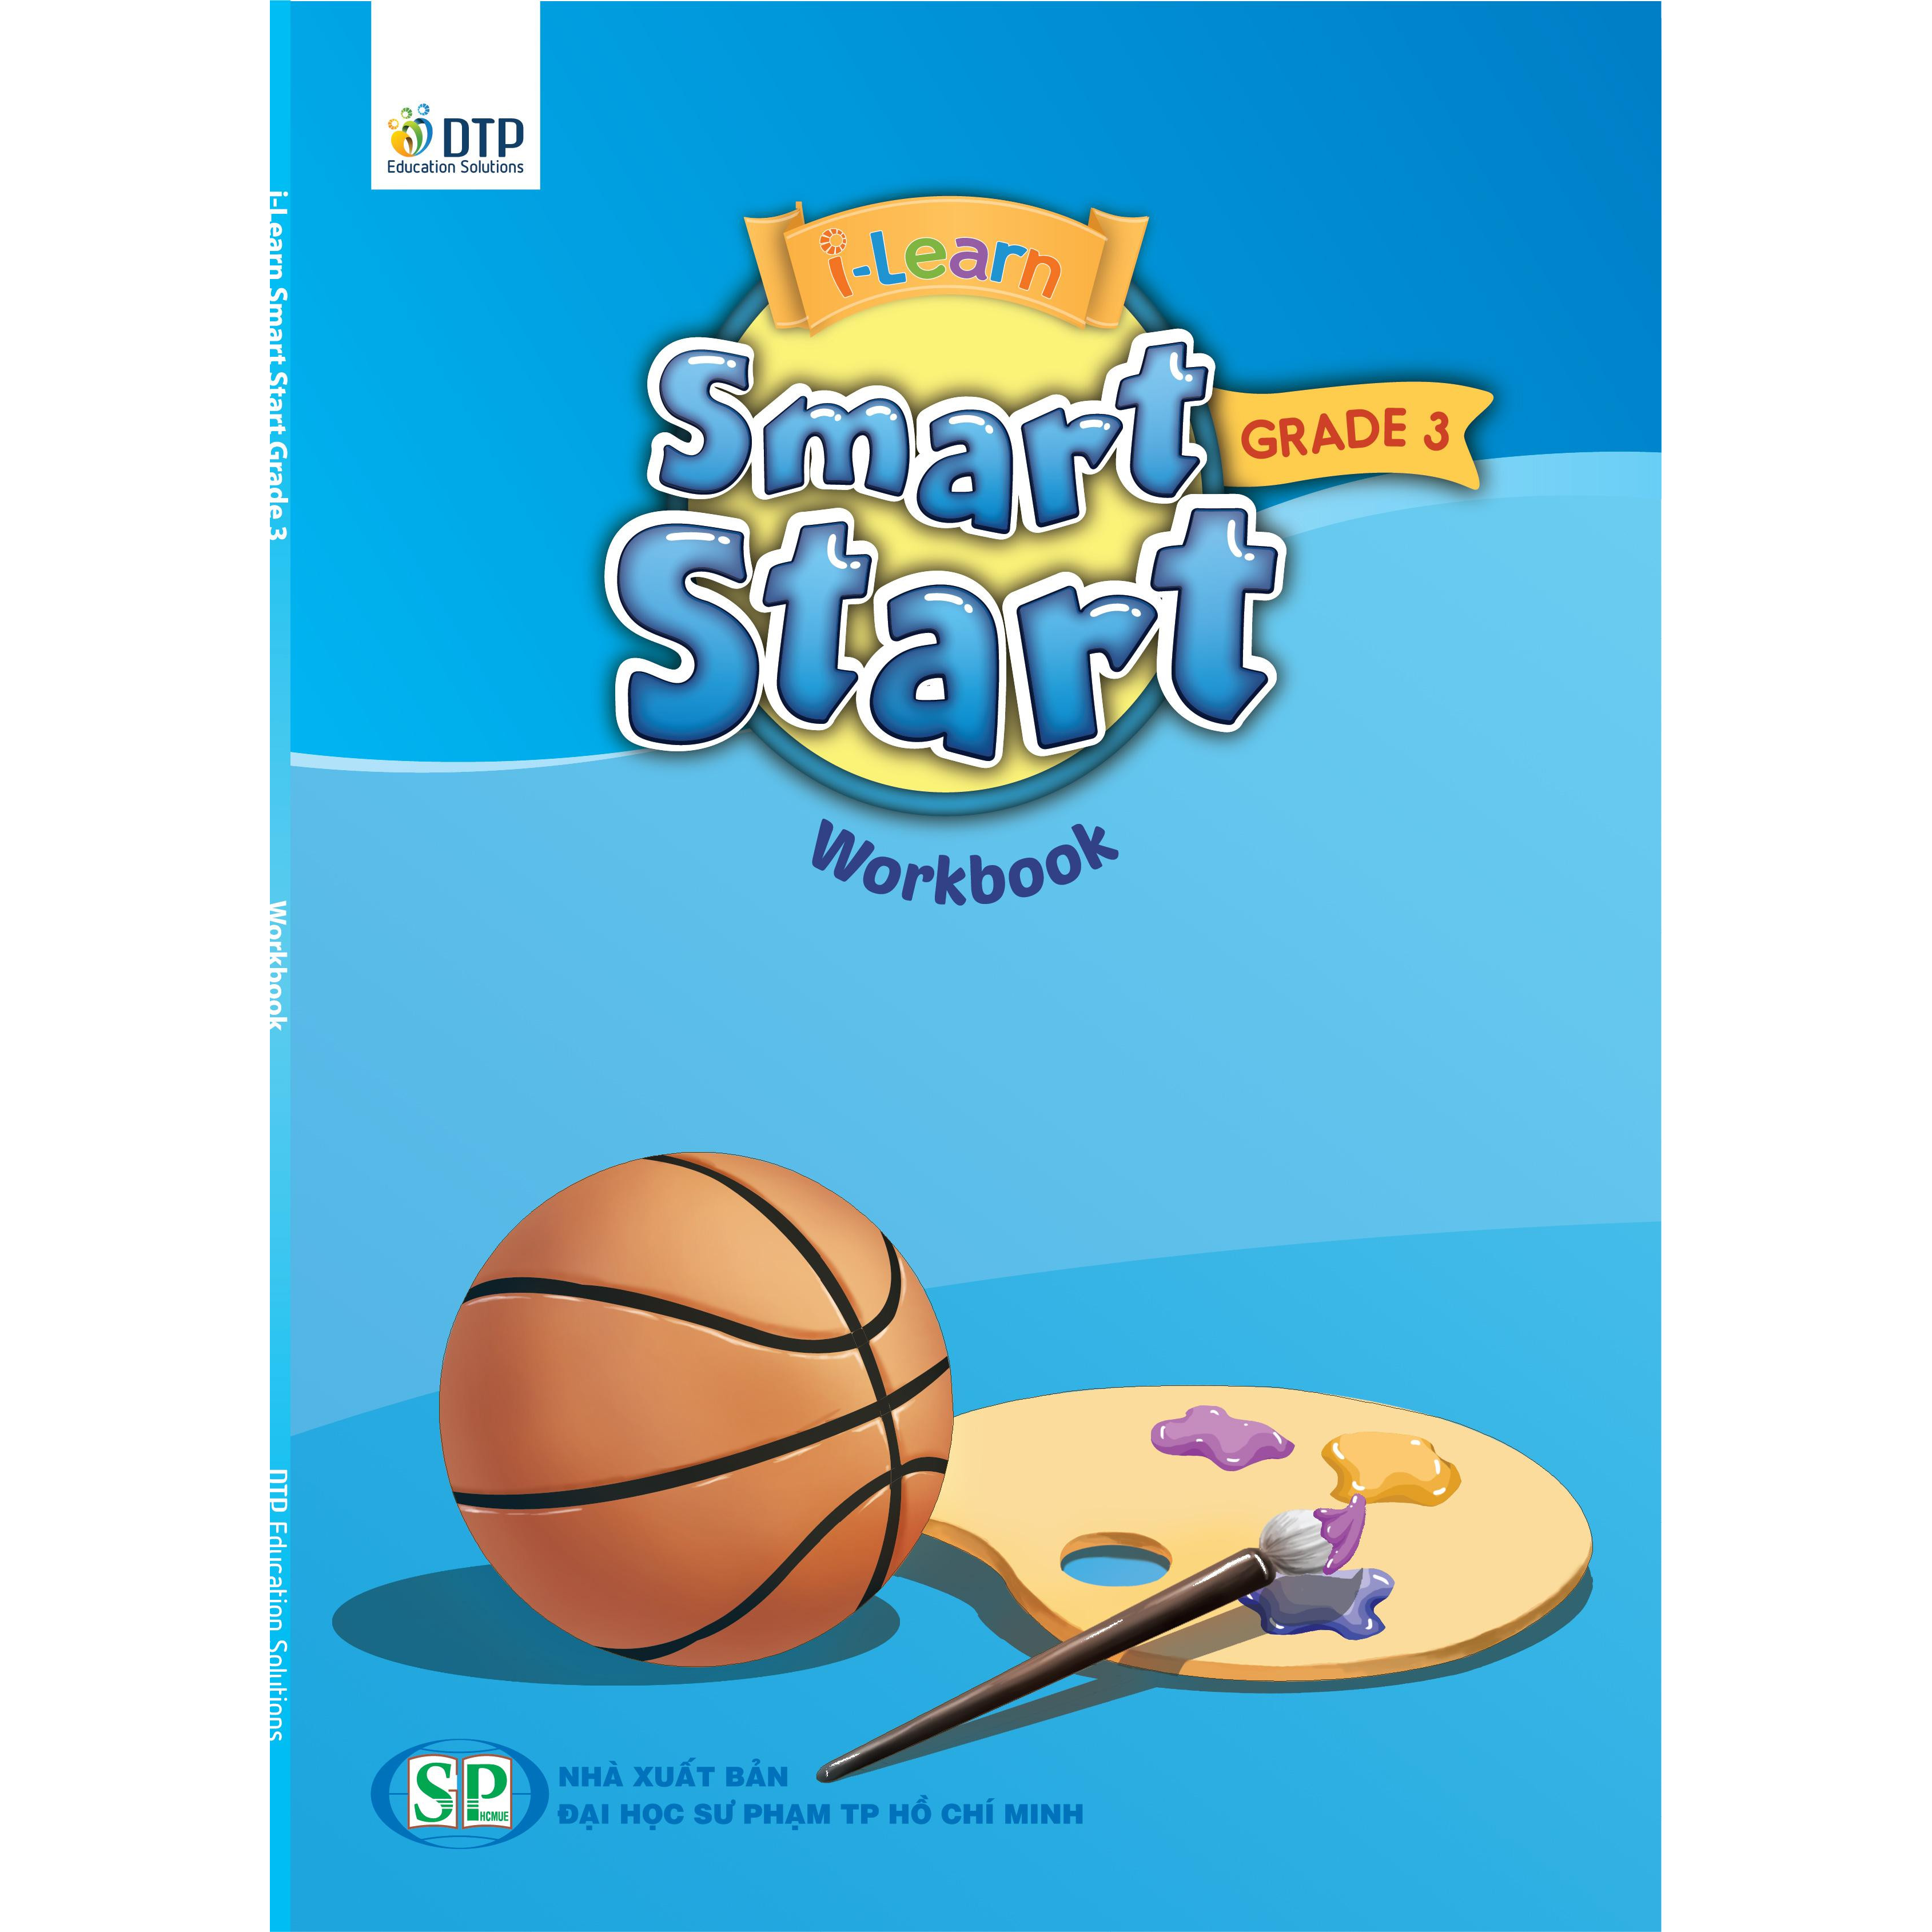 i-Learn Smart Start Grade 3 Workbook